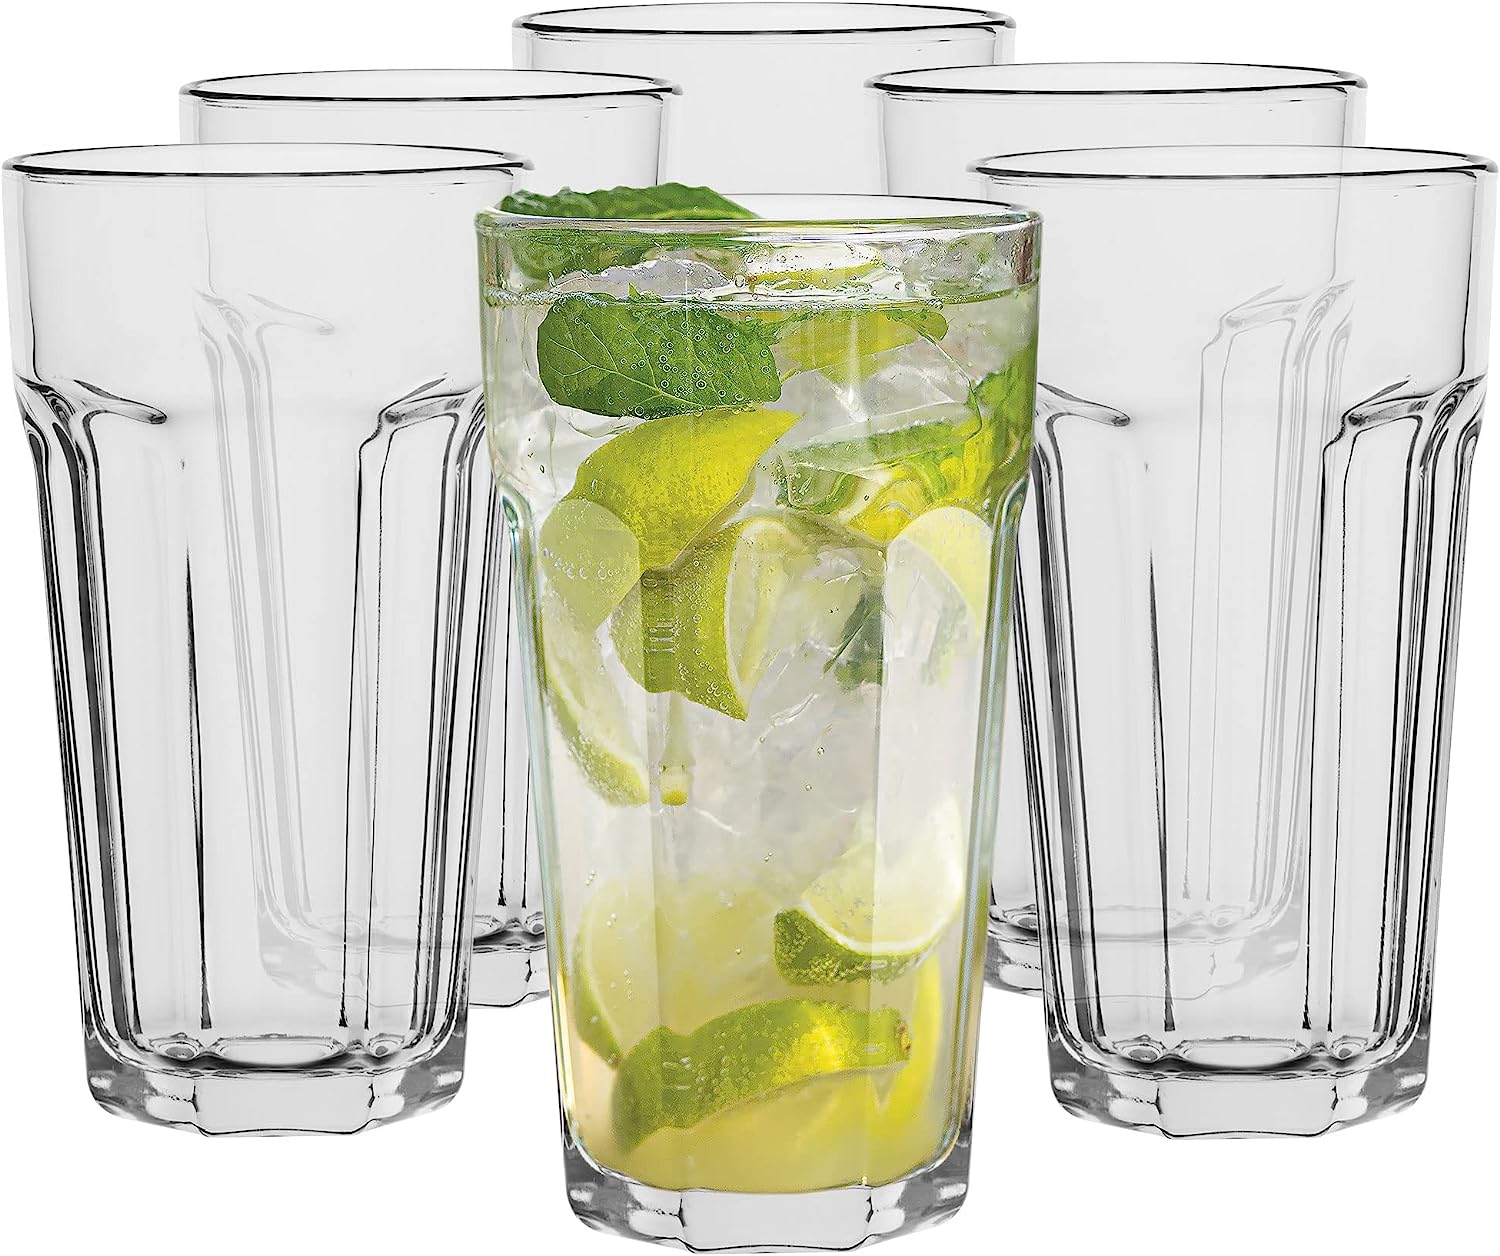 TREND FOR HOME Cocktailgläser Groß Trinkglas Caipirinha Gläser | 630 ml| Set von 6 | Cocktail Highball Wasser Glässerset XXL Tumblers Retro Design | Spülmaschinenfest | Kollektion Alva | Transparent